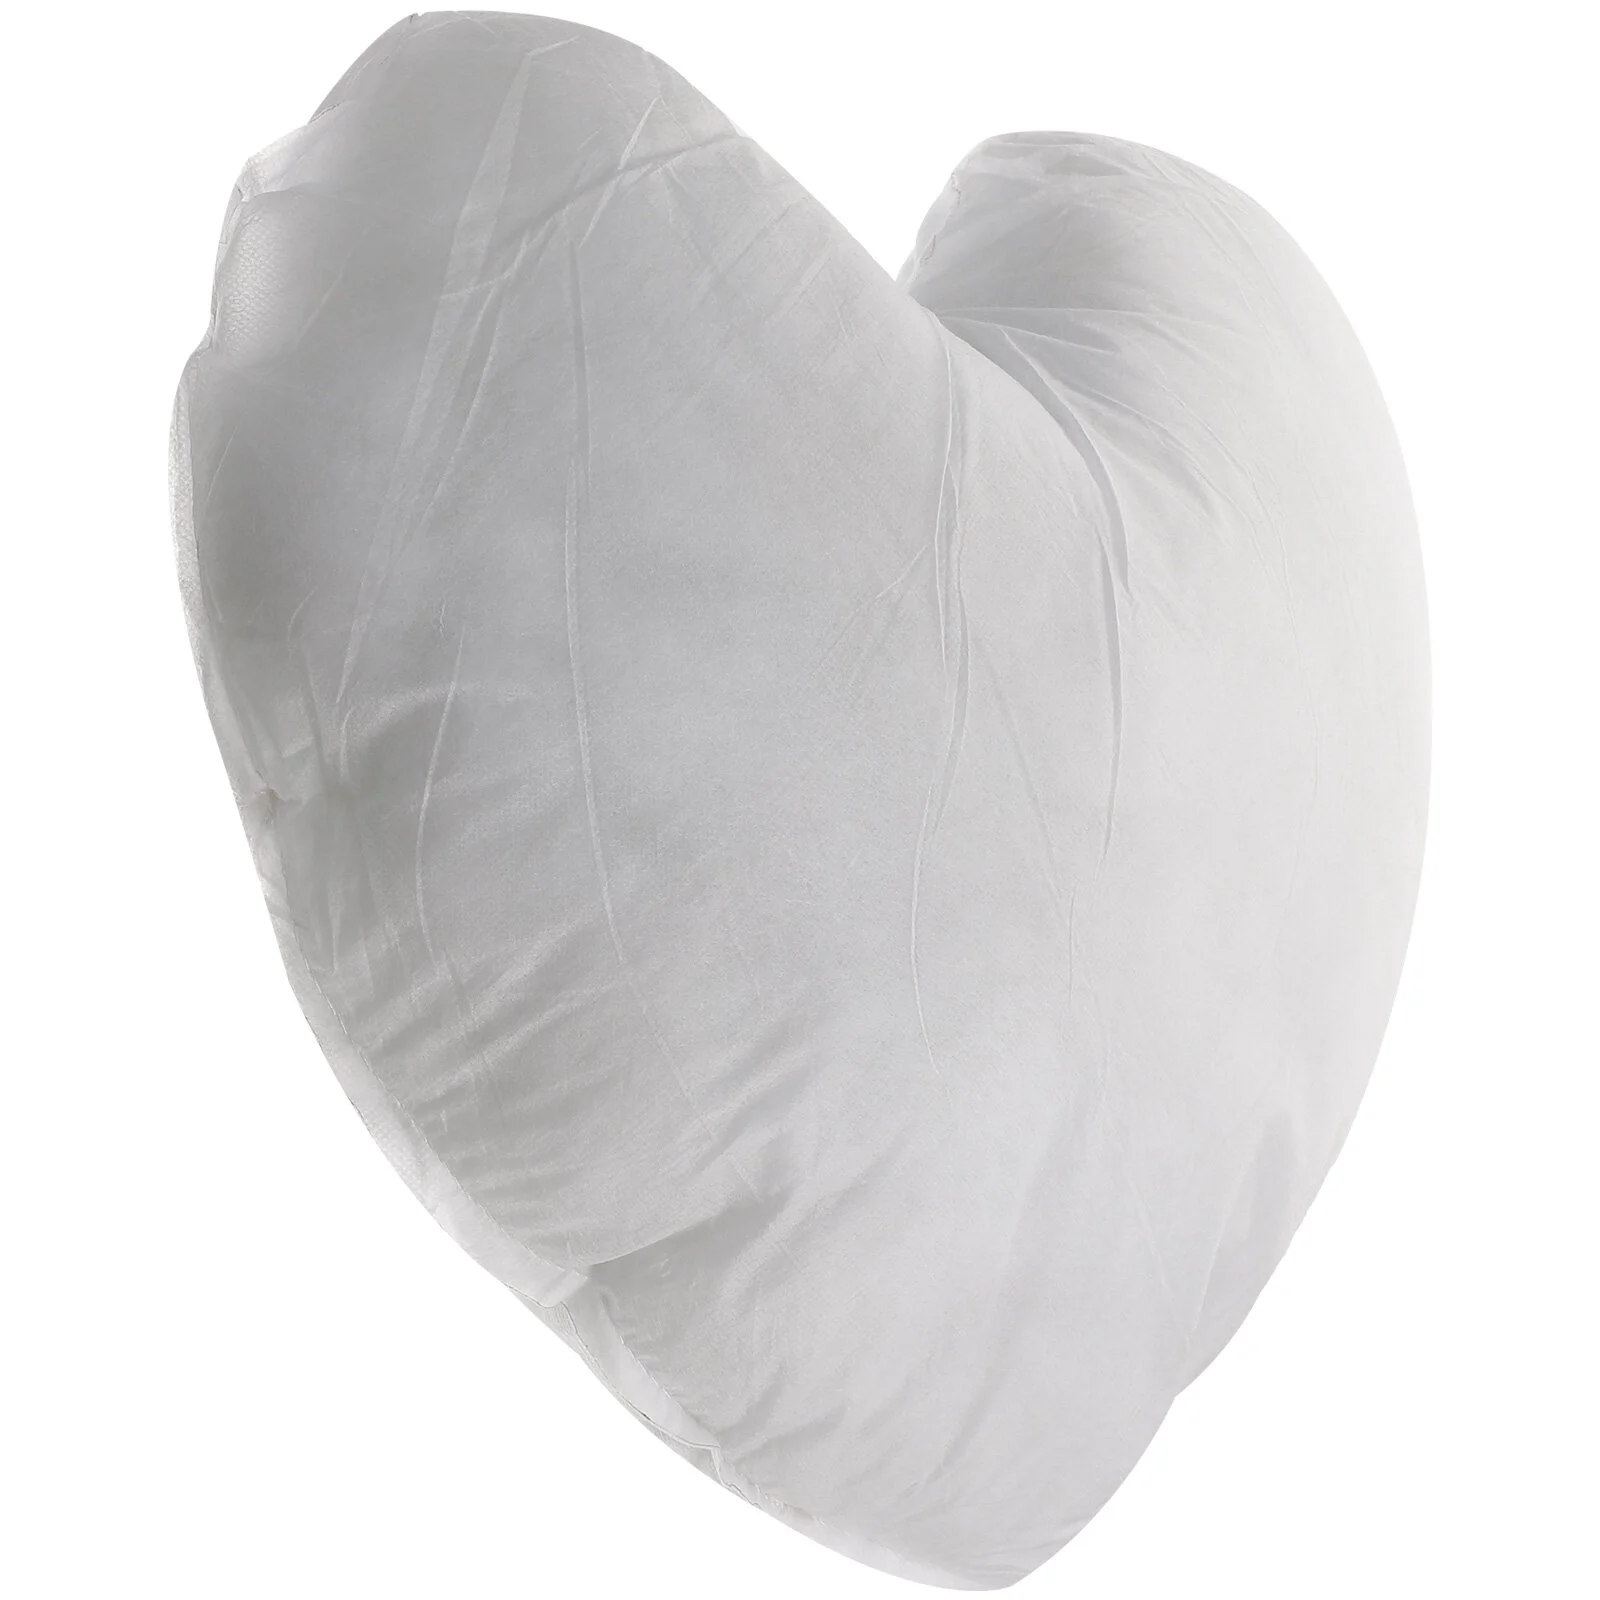 

Comfortable Pillow Peach Heart Inserts Heart-shaped 42x41cm Fillers Chair Throw Outdoor Pp Cotton Sofa Stuffer Home Pillowcase